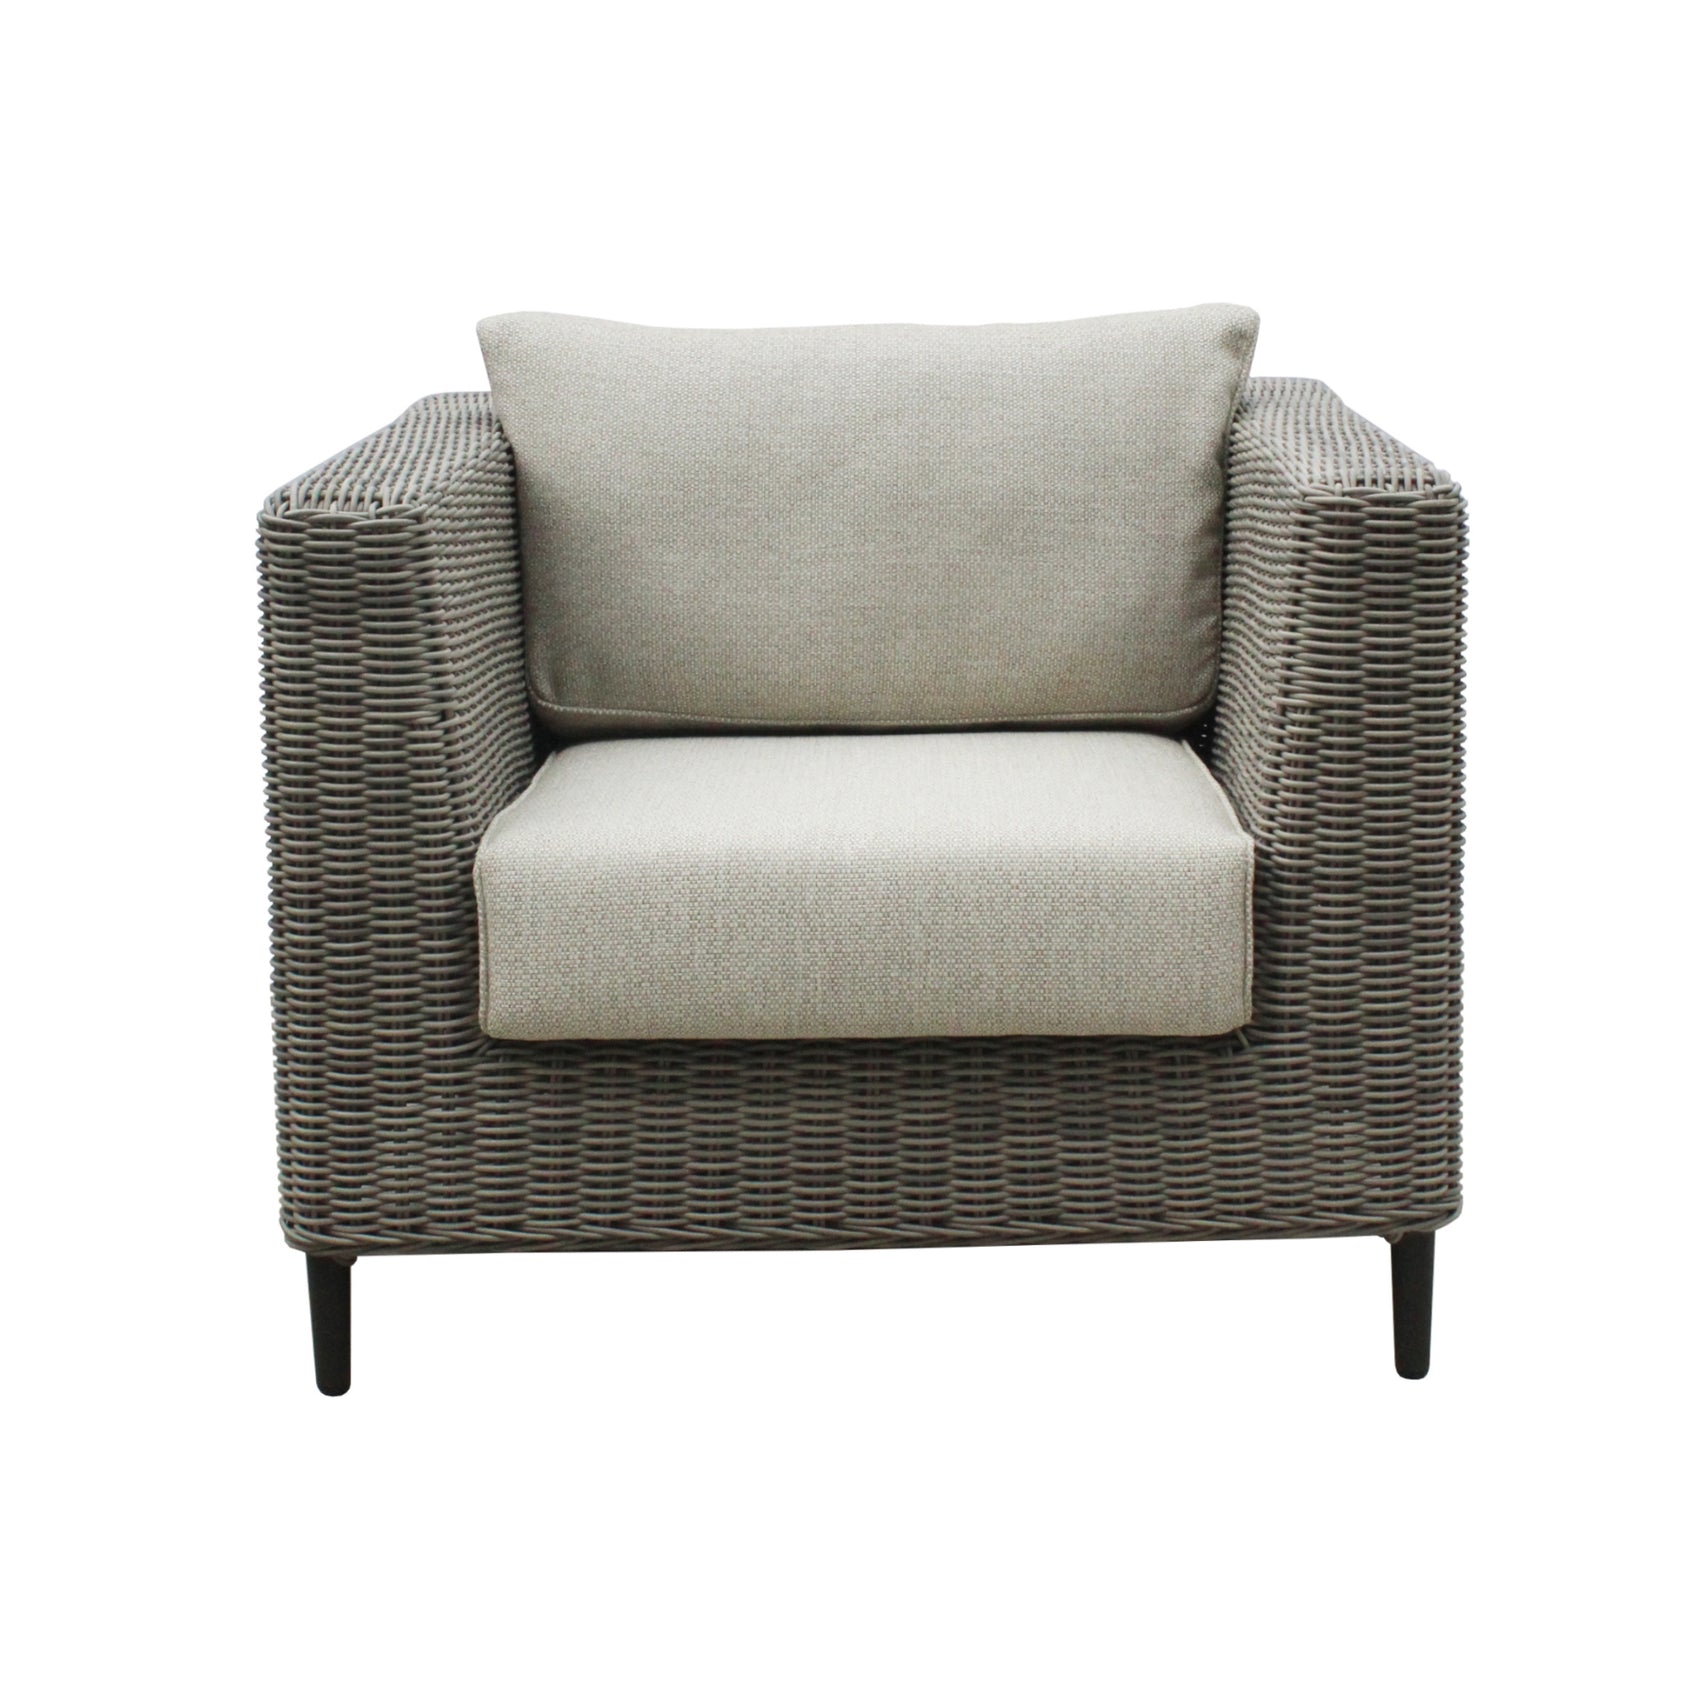 Lara 1 Seater Outdoor Sofa Armchair Rattan Wicker Lounge Light Grey